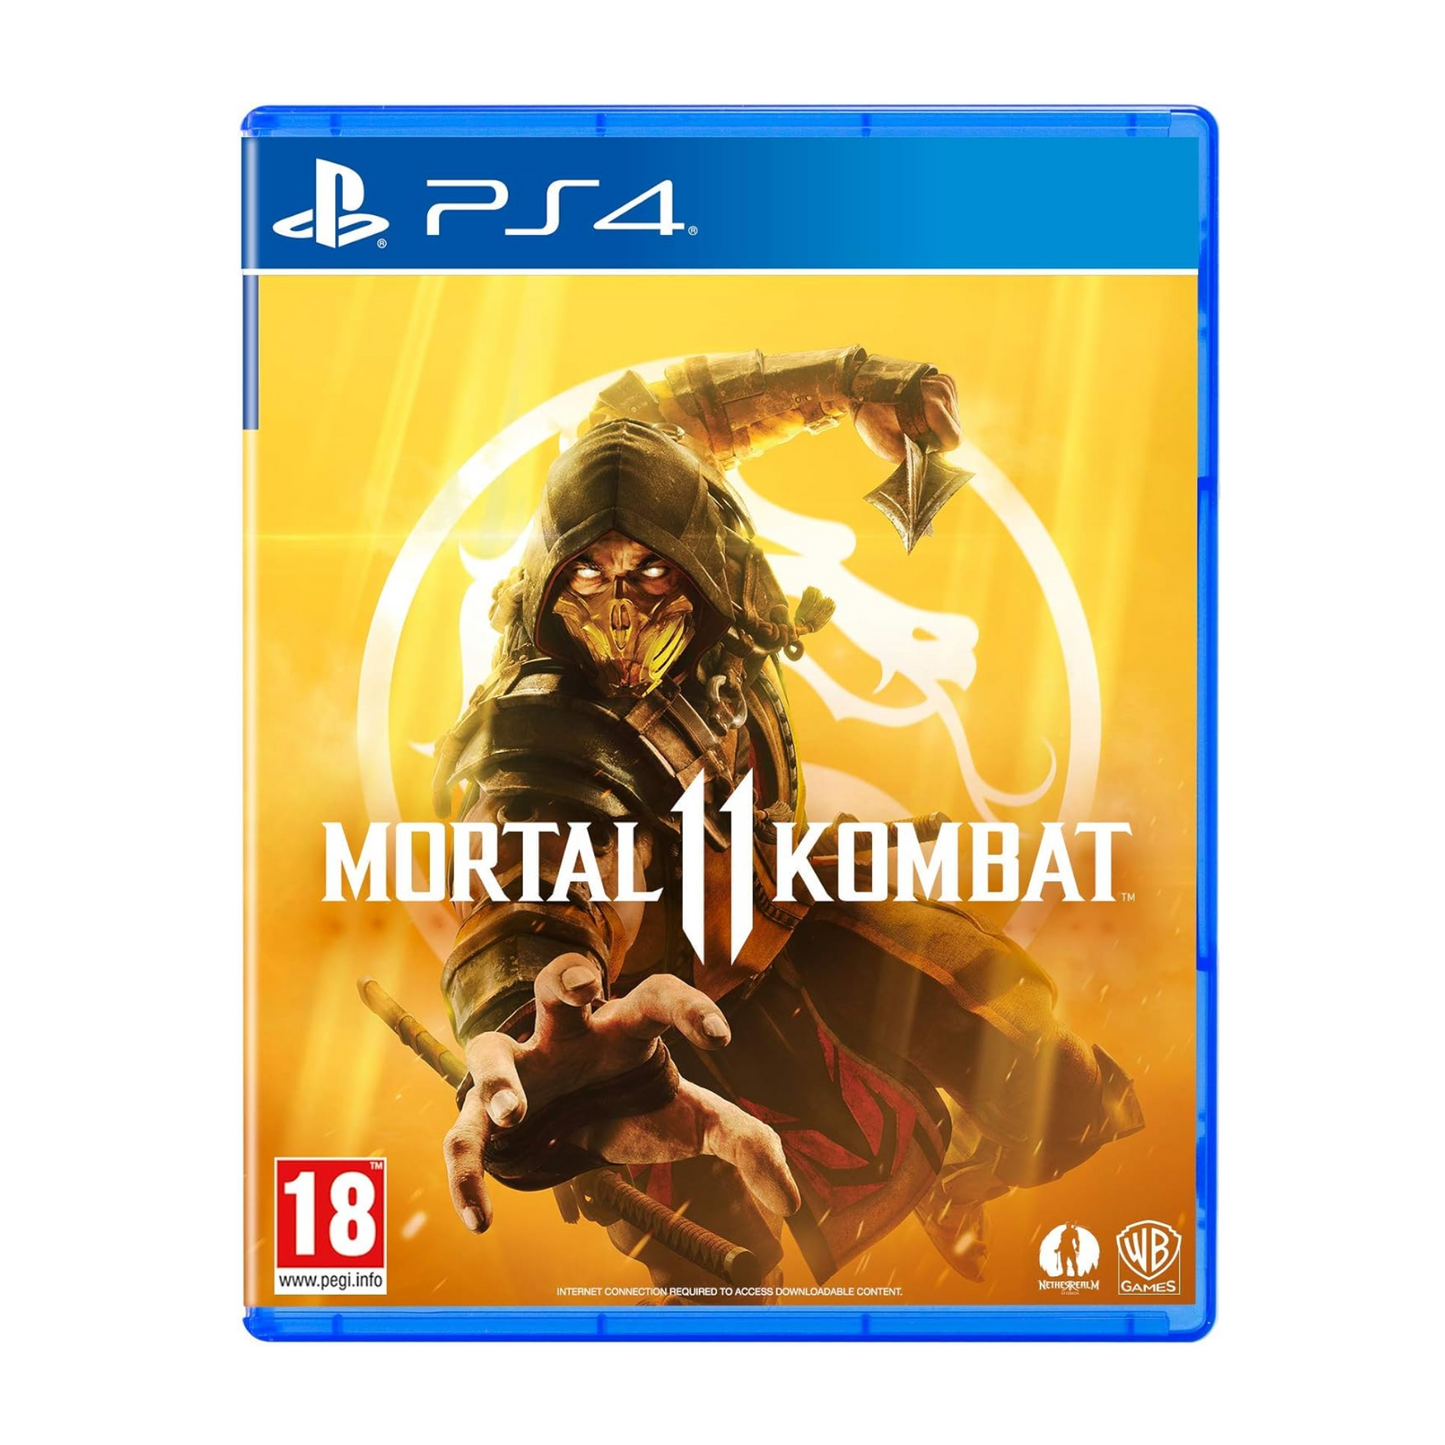 Mortal Kombat 11 Video Game for Playstation 4